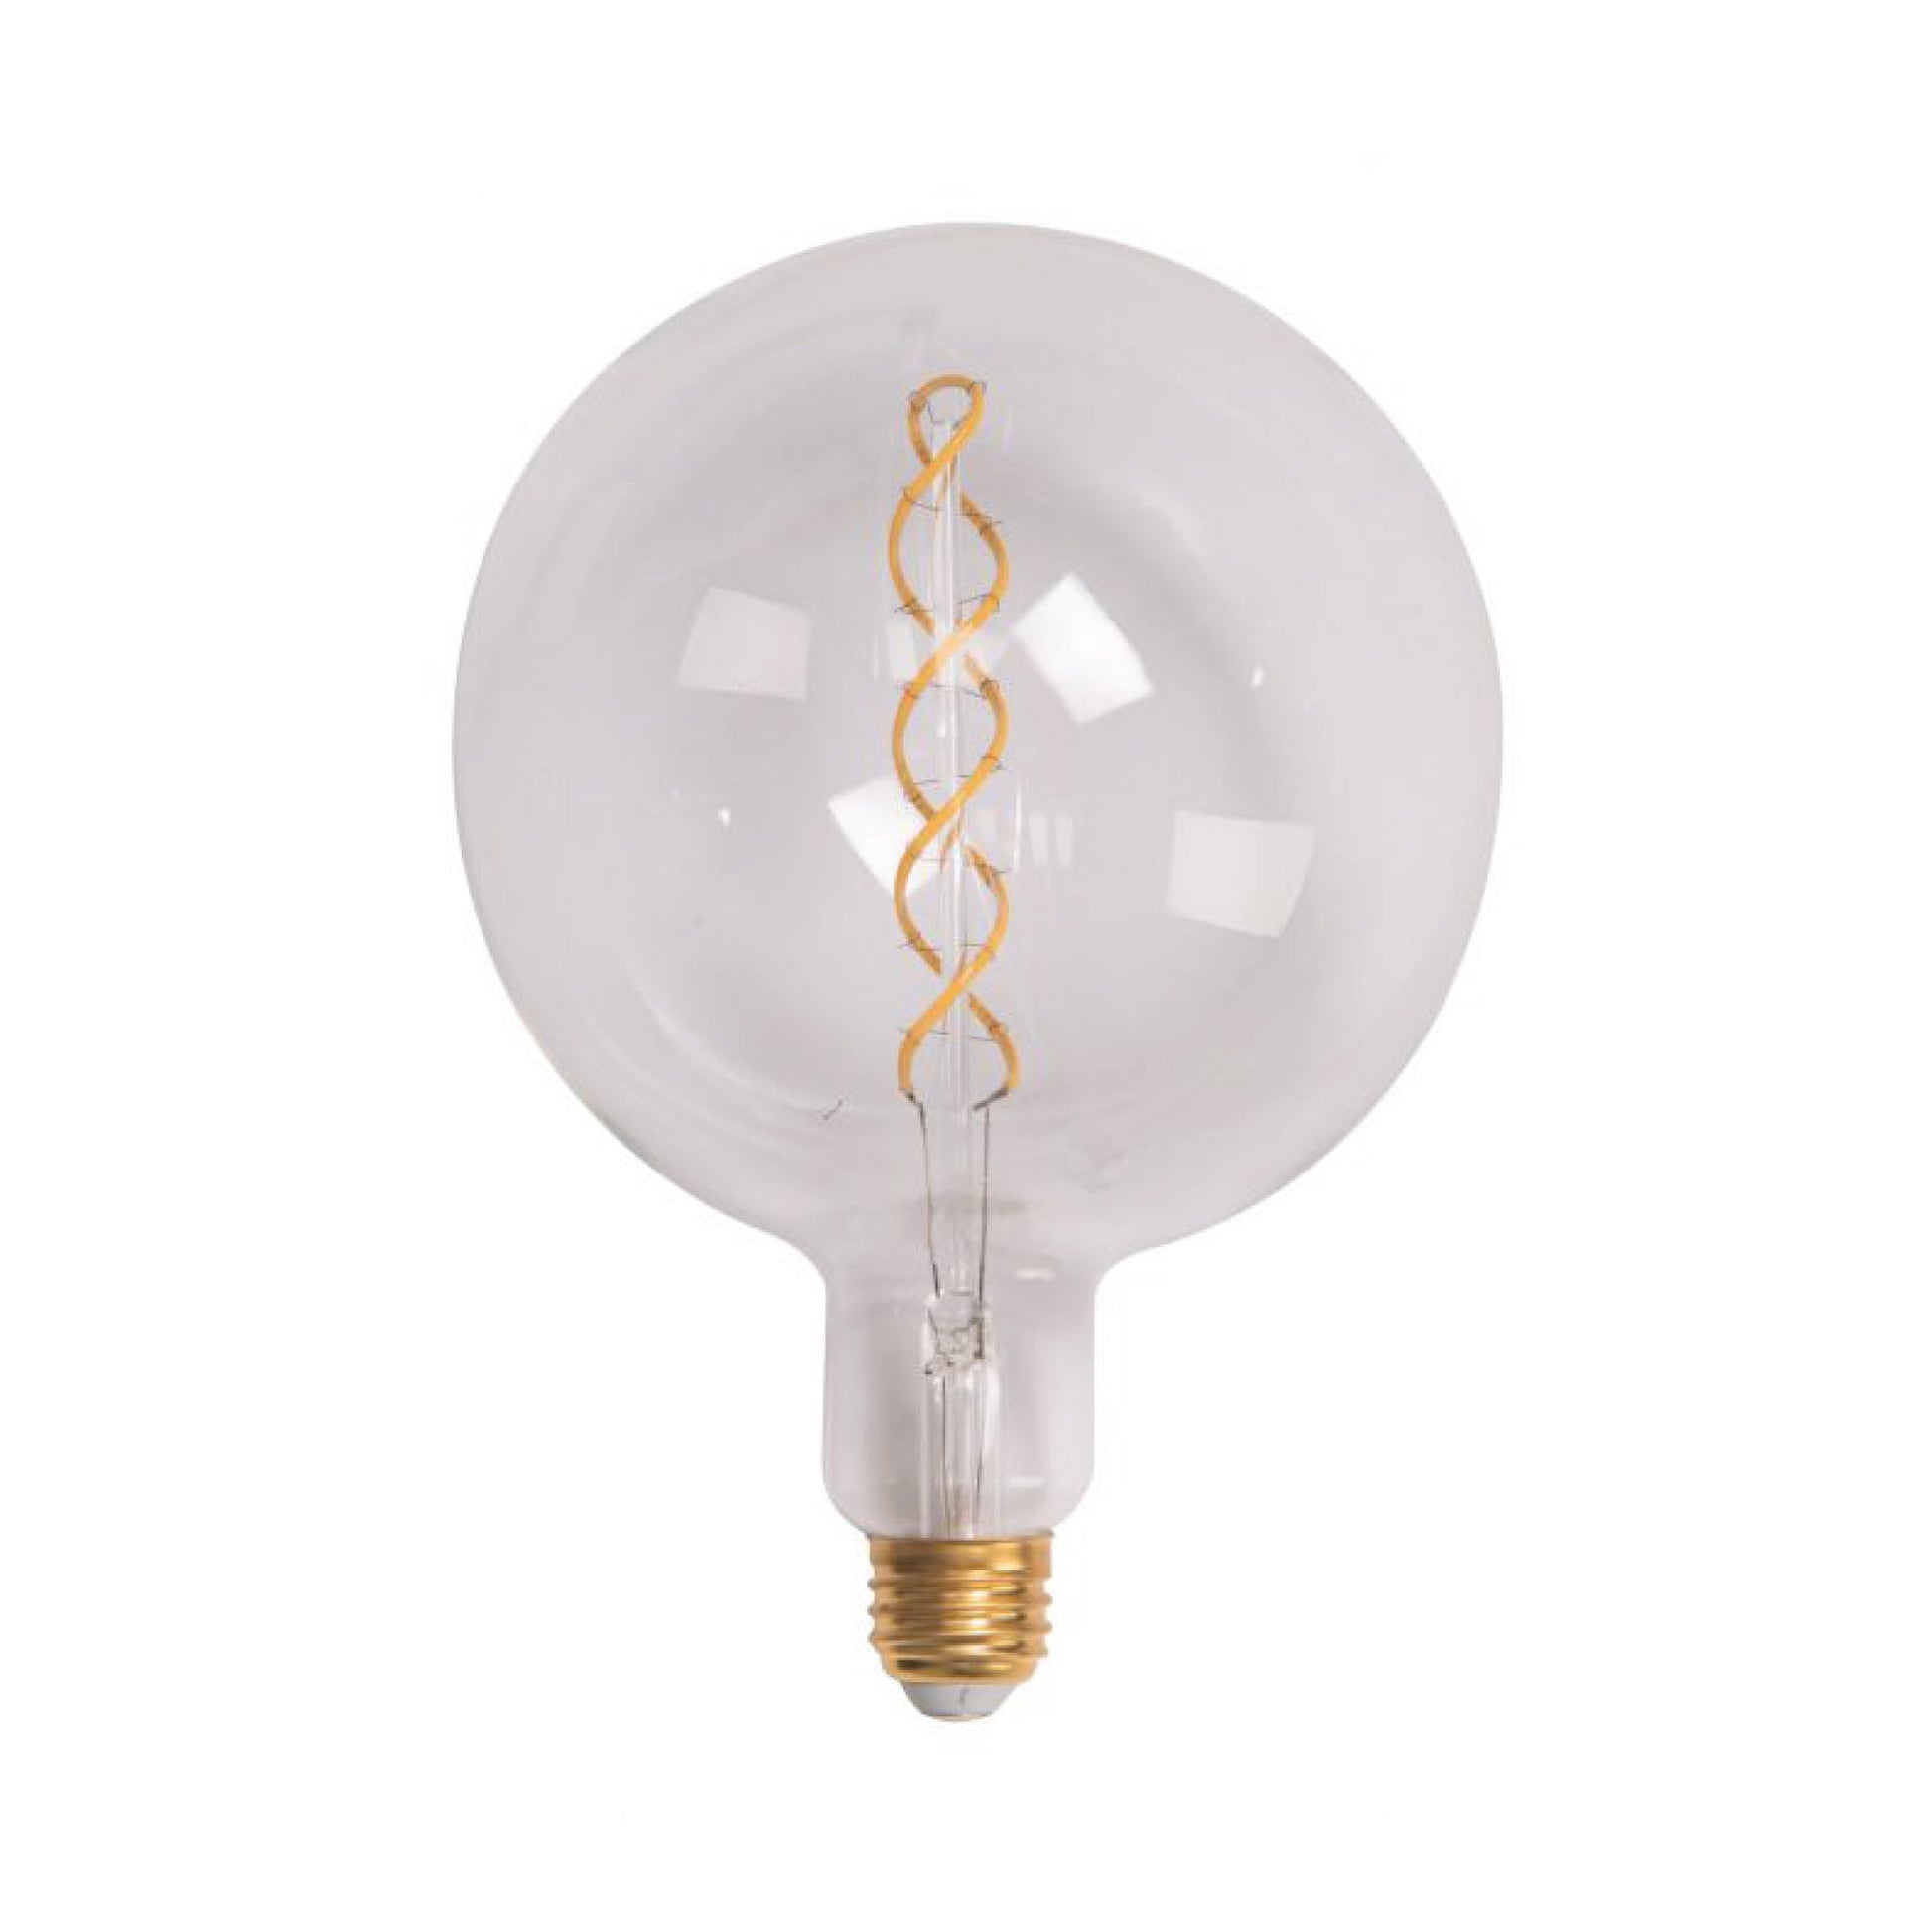 Craftmade 7-Watt G50 Clear Finish, E26 Medium Base, 8.4" M.O.L., 3000K Warm White LED Light Bulb